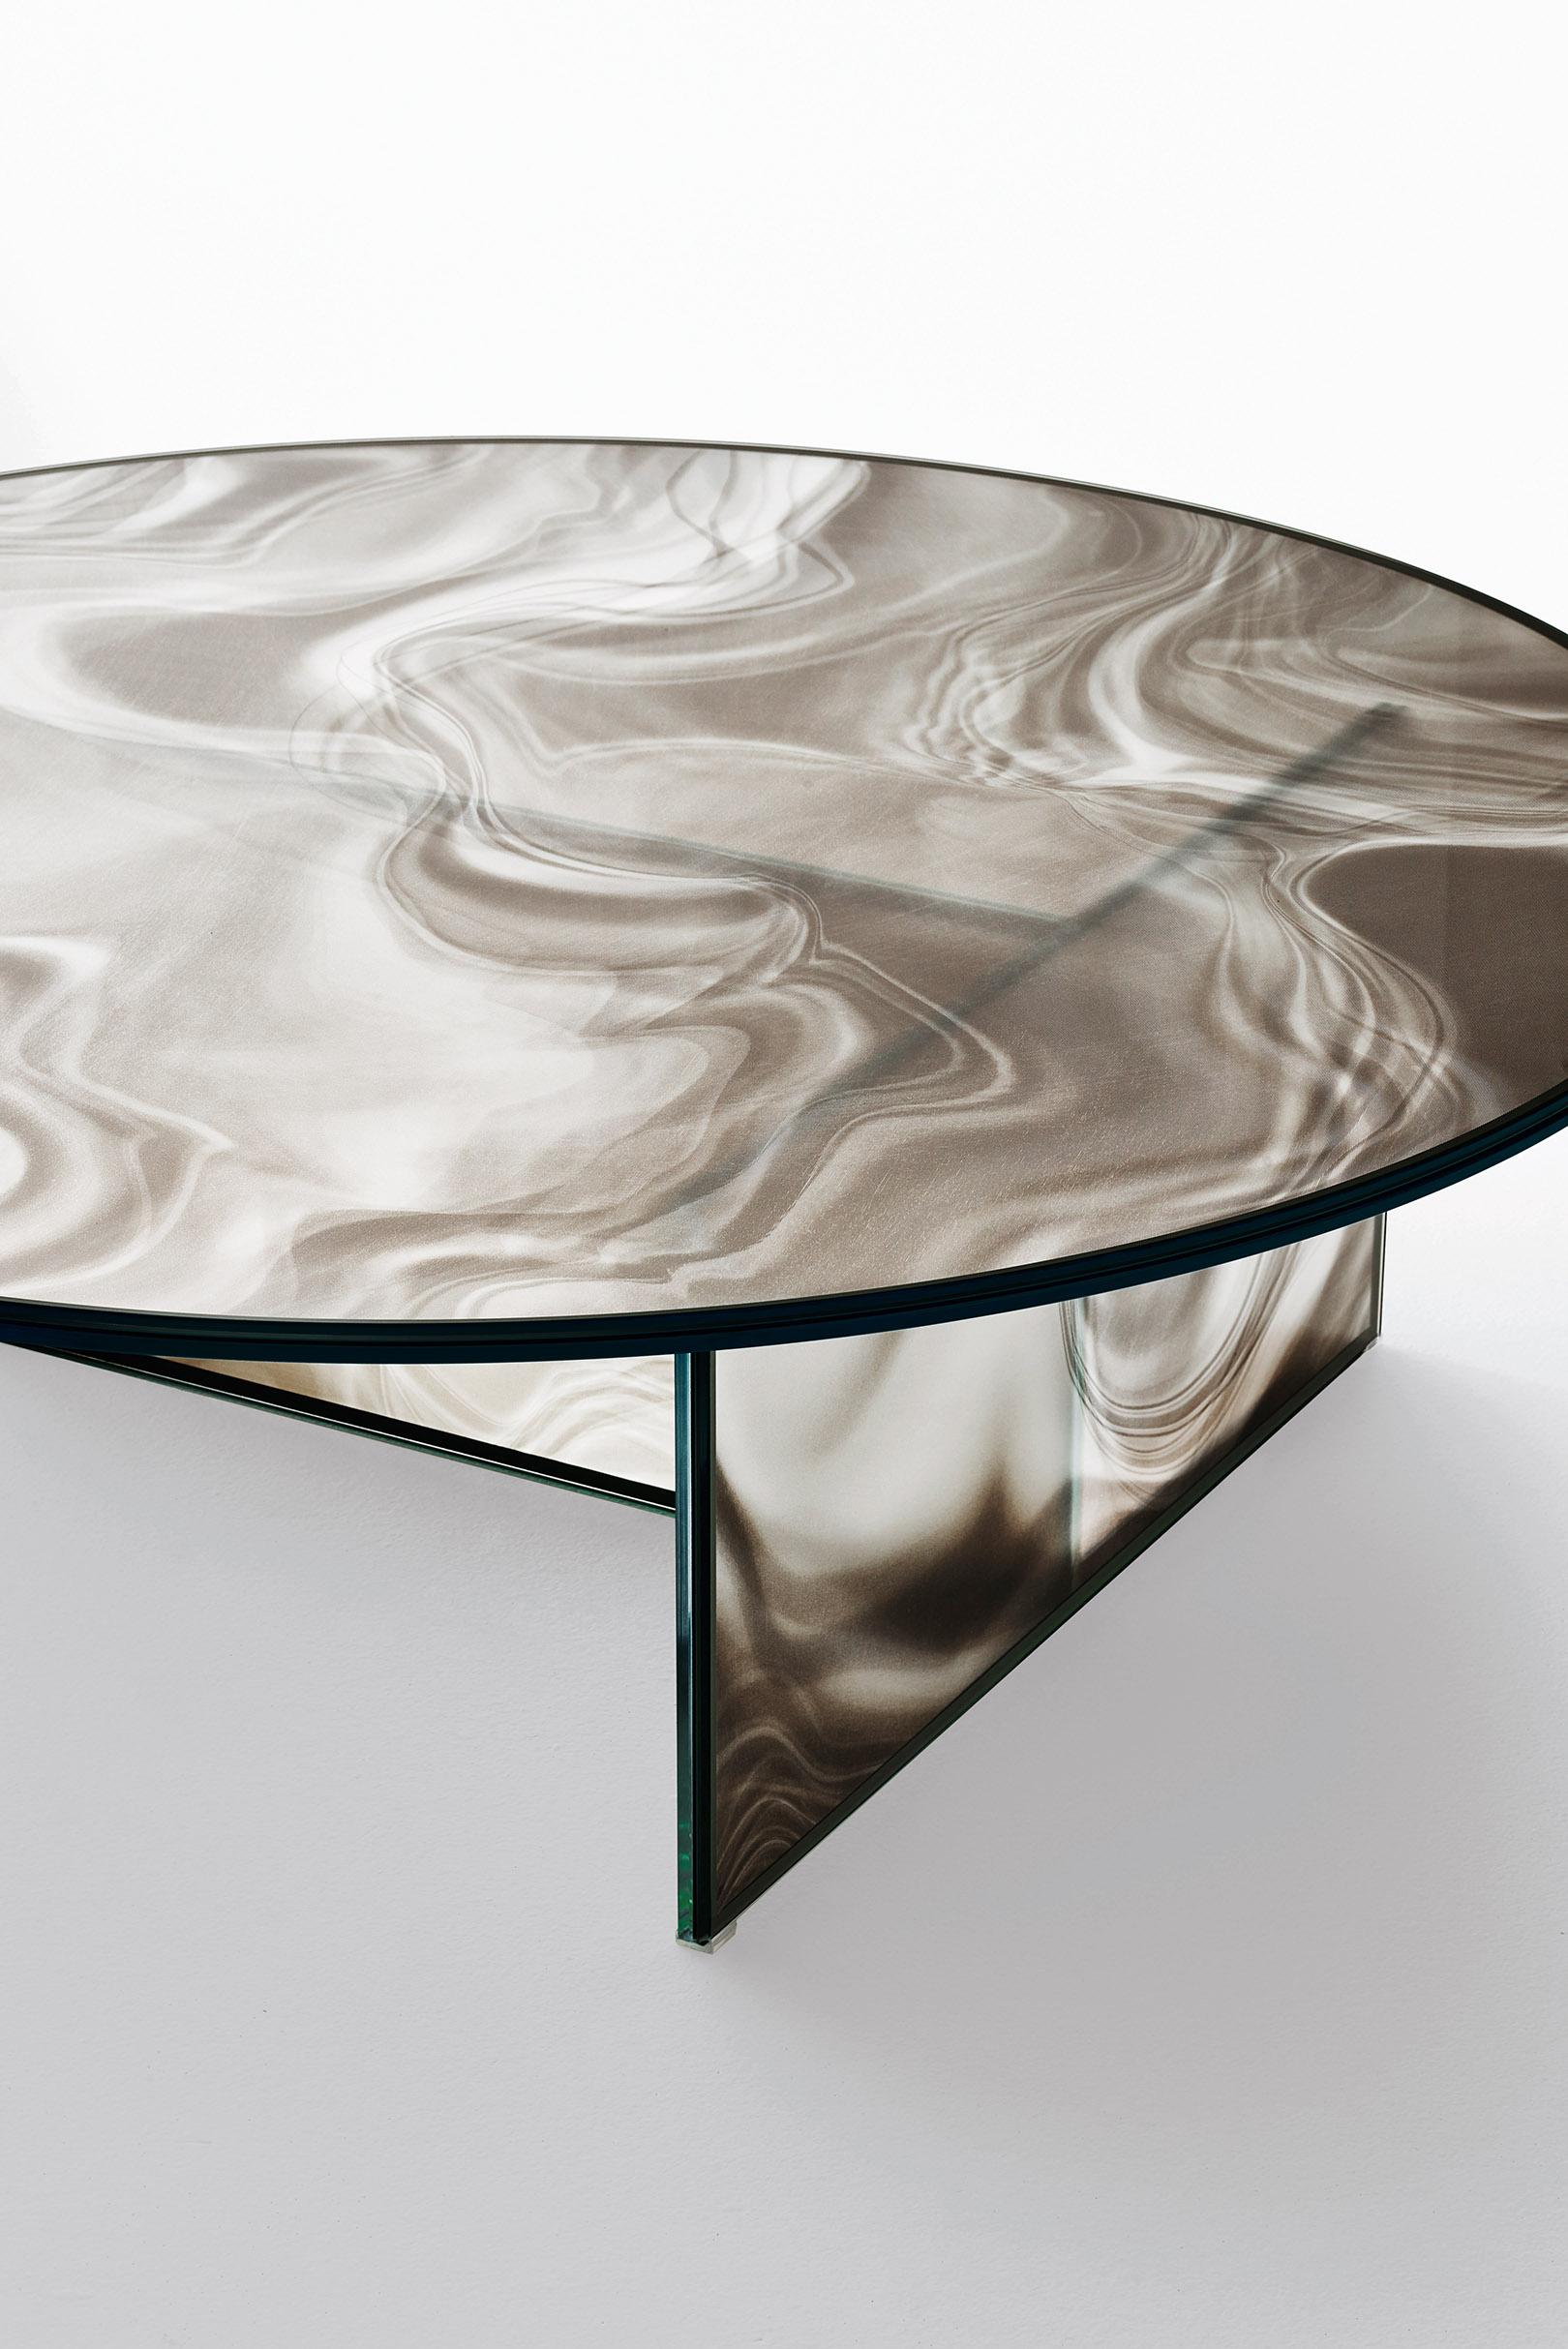 LIQUEFY Console Table, by Patricia Urquiola for Glas Italia In New Condition For Sale In Macherio, IT